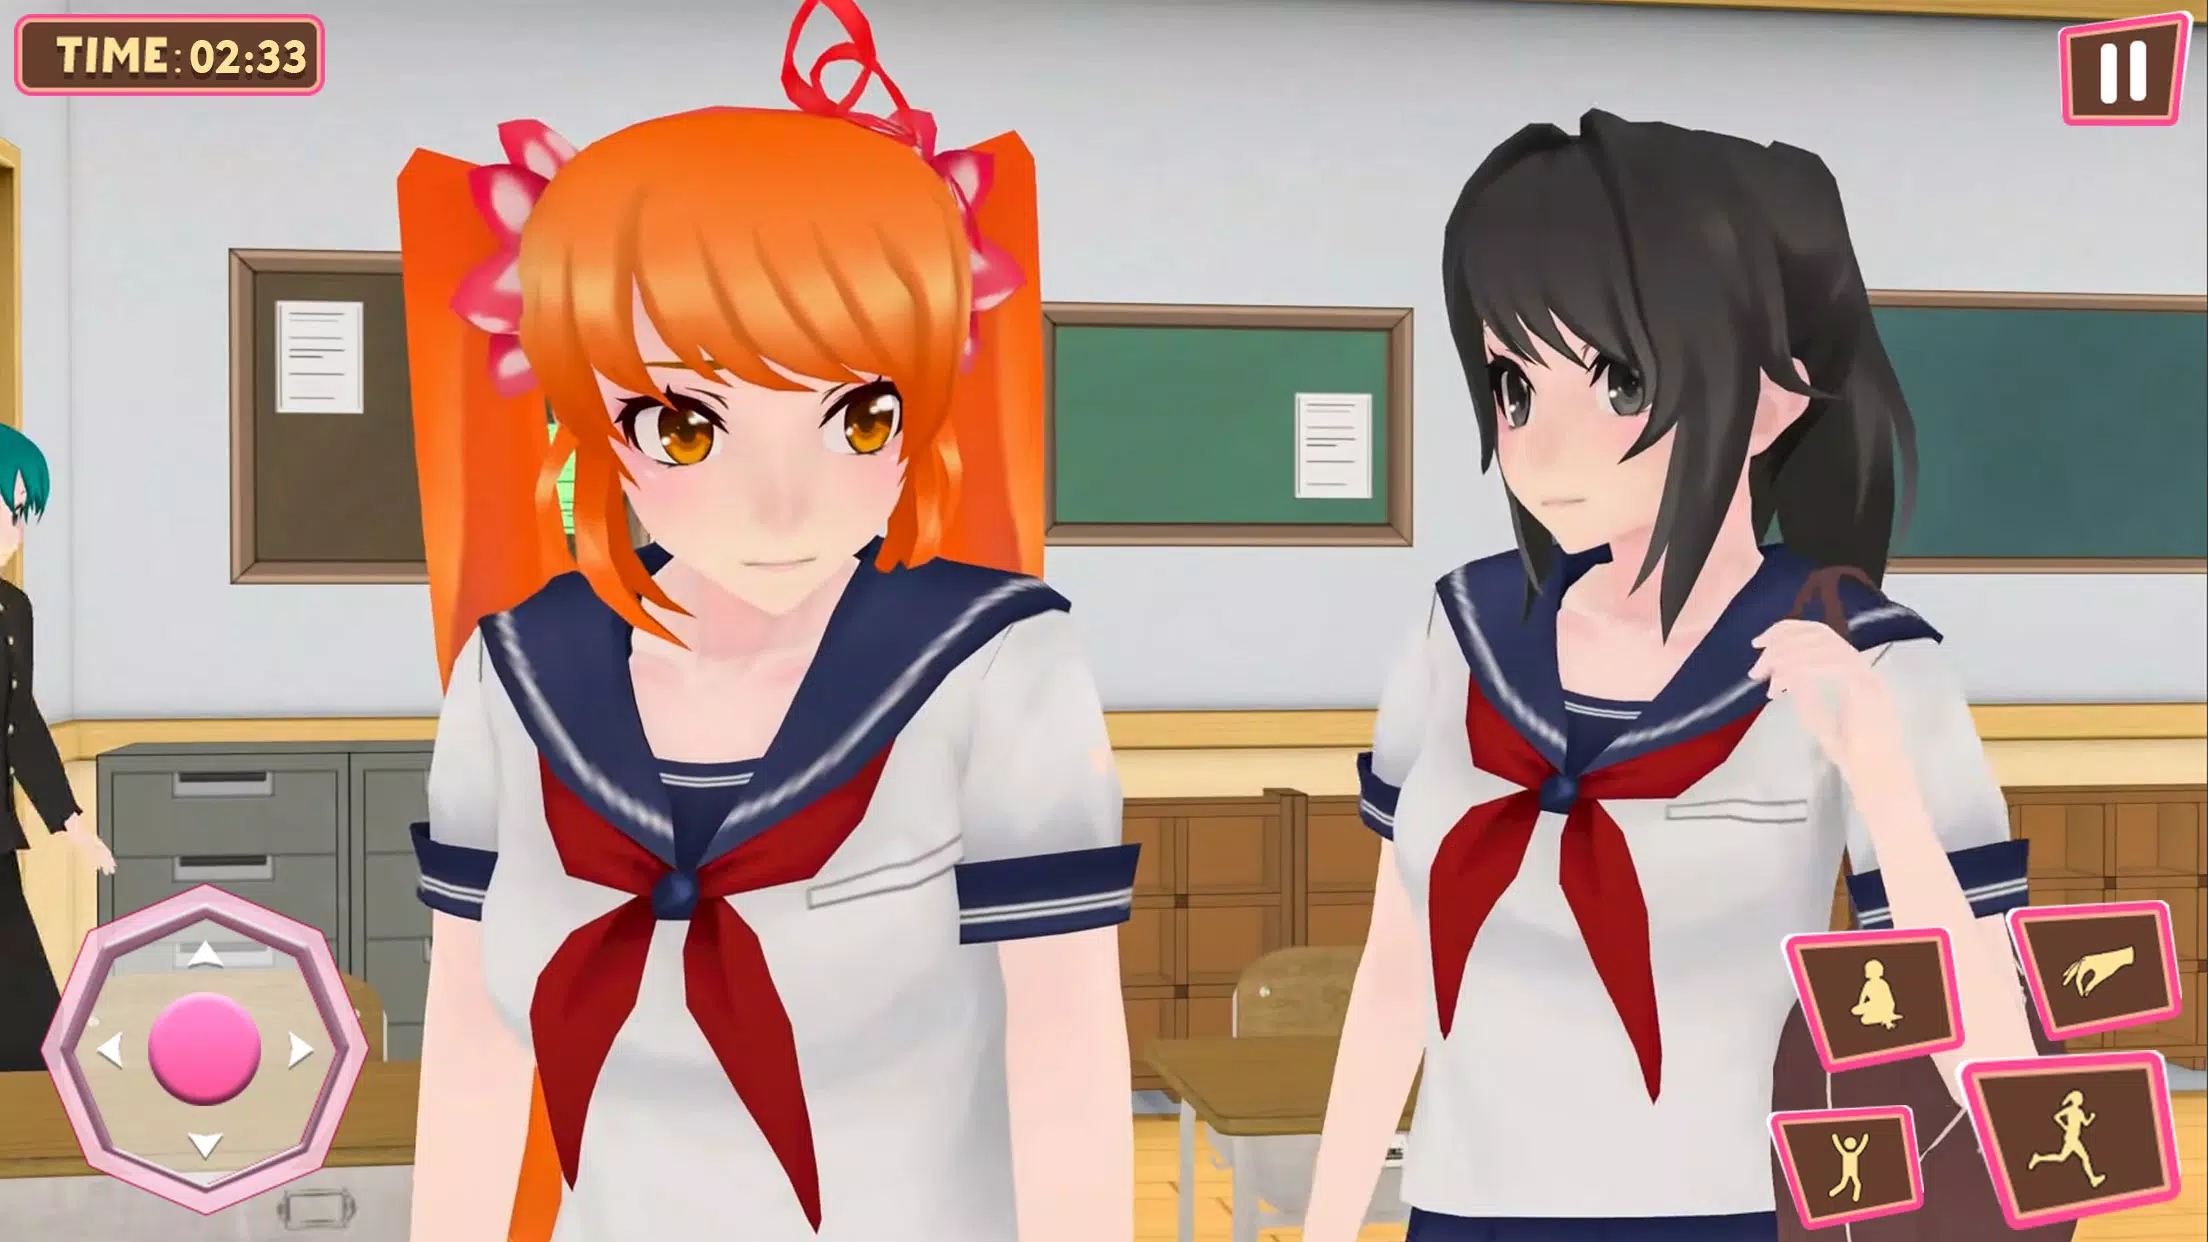 Scary Teacher 3D - SAKURA School Simulator Version - BiliBili